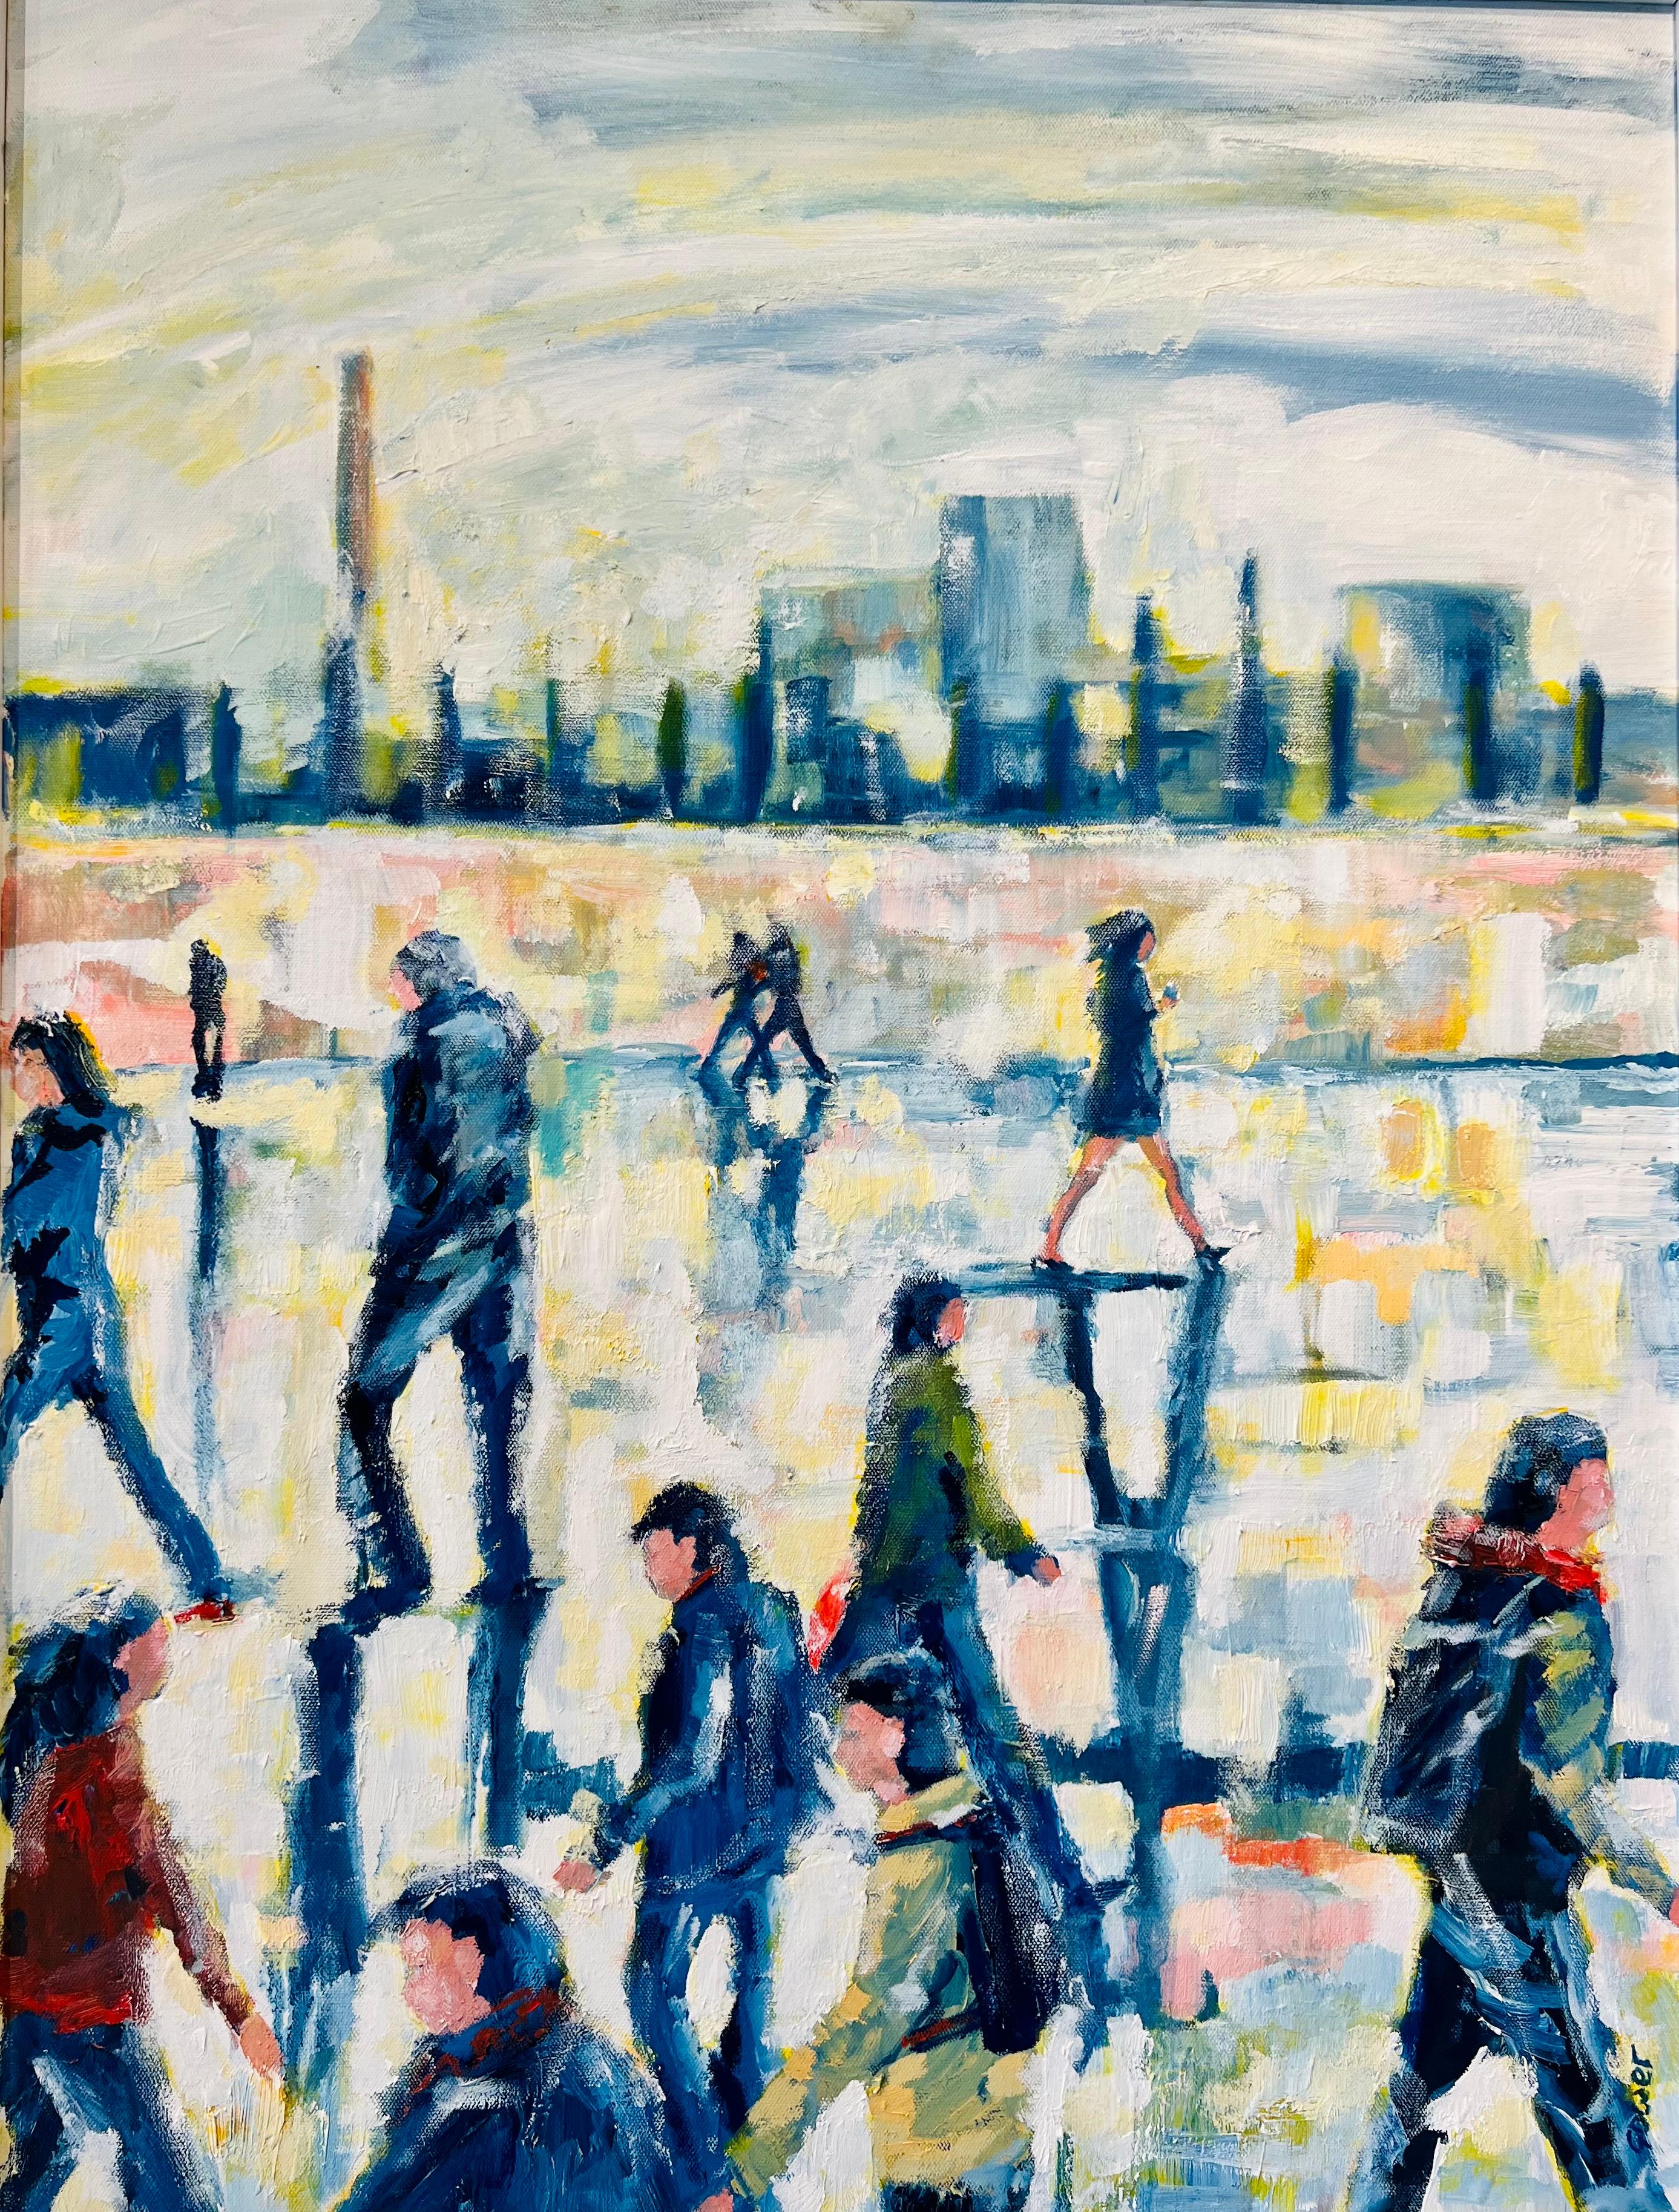 London Commute-original impressionism figurative Cityscape oil painting- ART